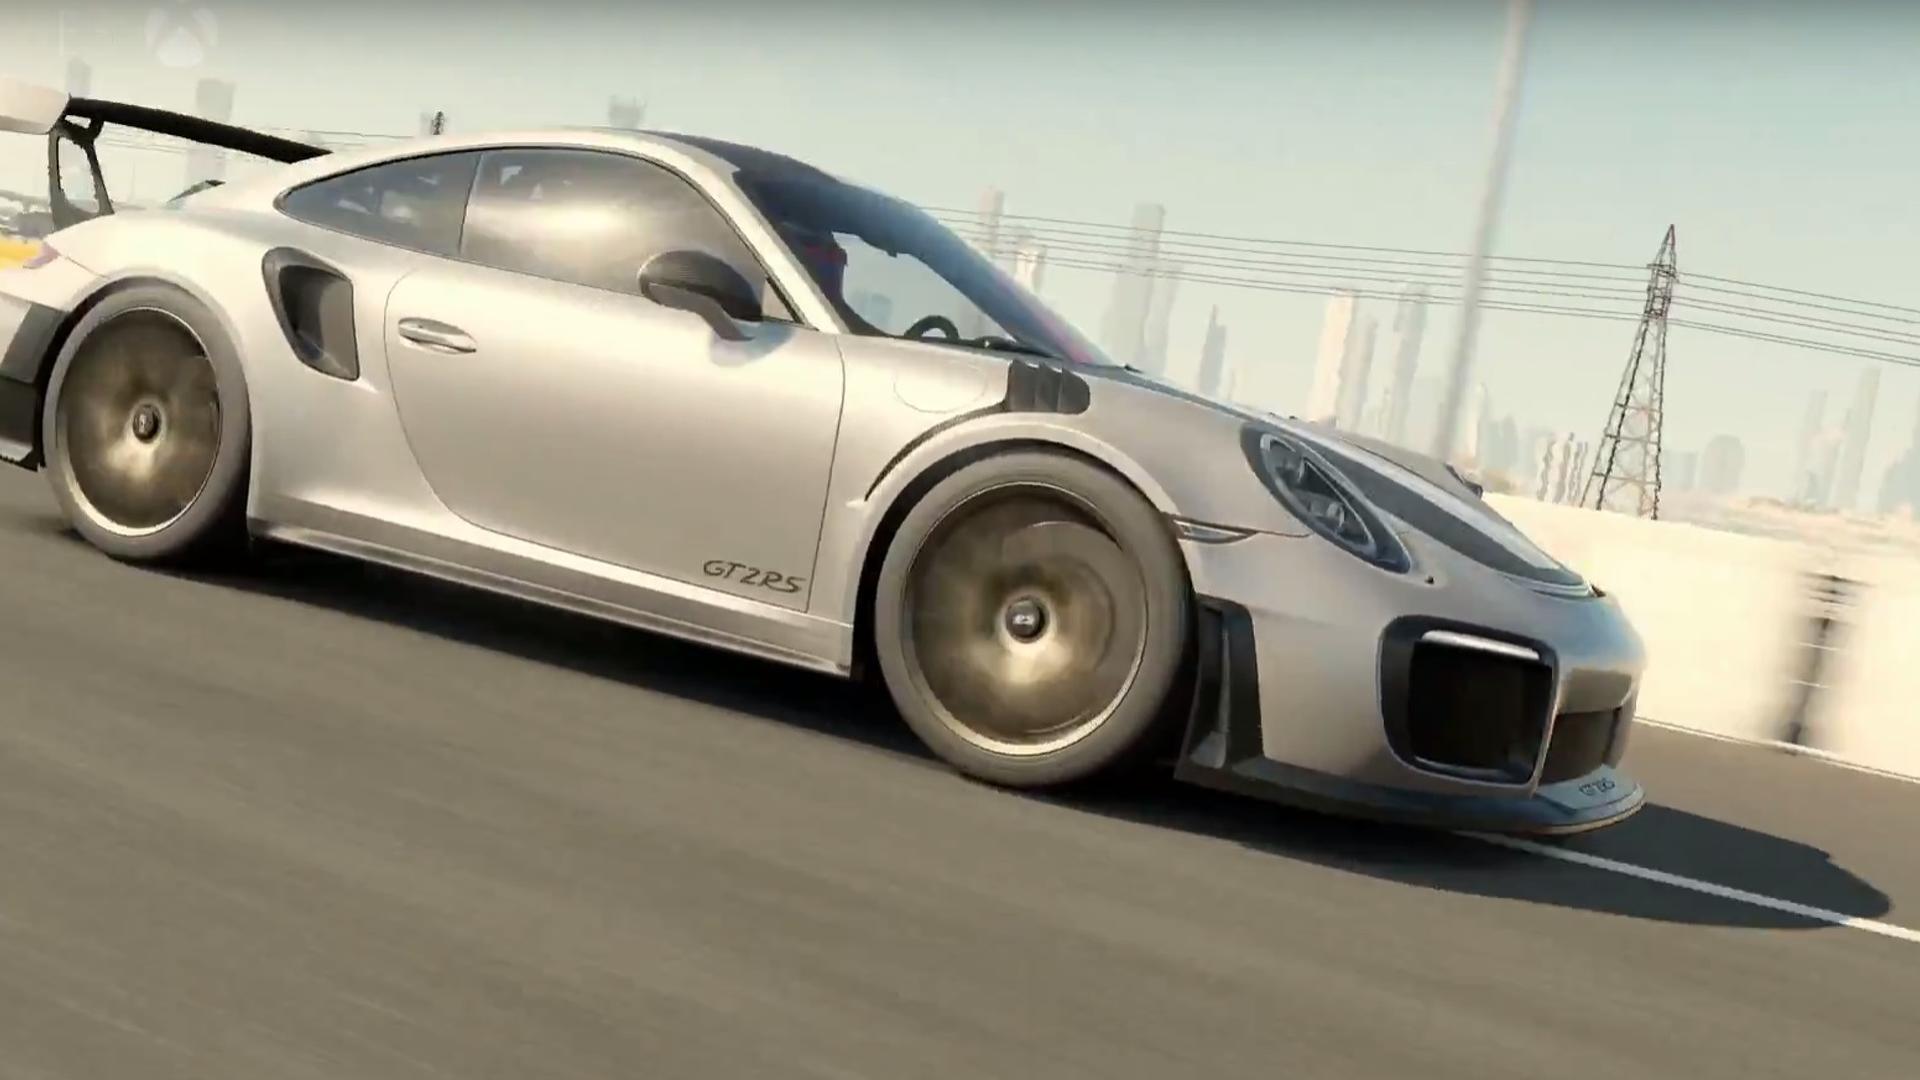 Porsche 911 GT2 RS Forza Motorsport 7 9 - زمان‌های ثبت شده توسط انواع پورشه در بازی فورزا موتوراسپرت 7